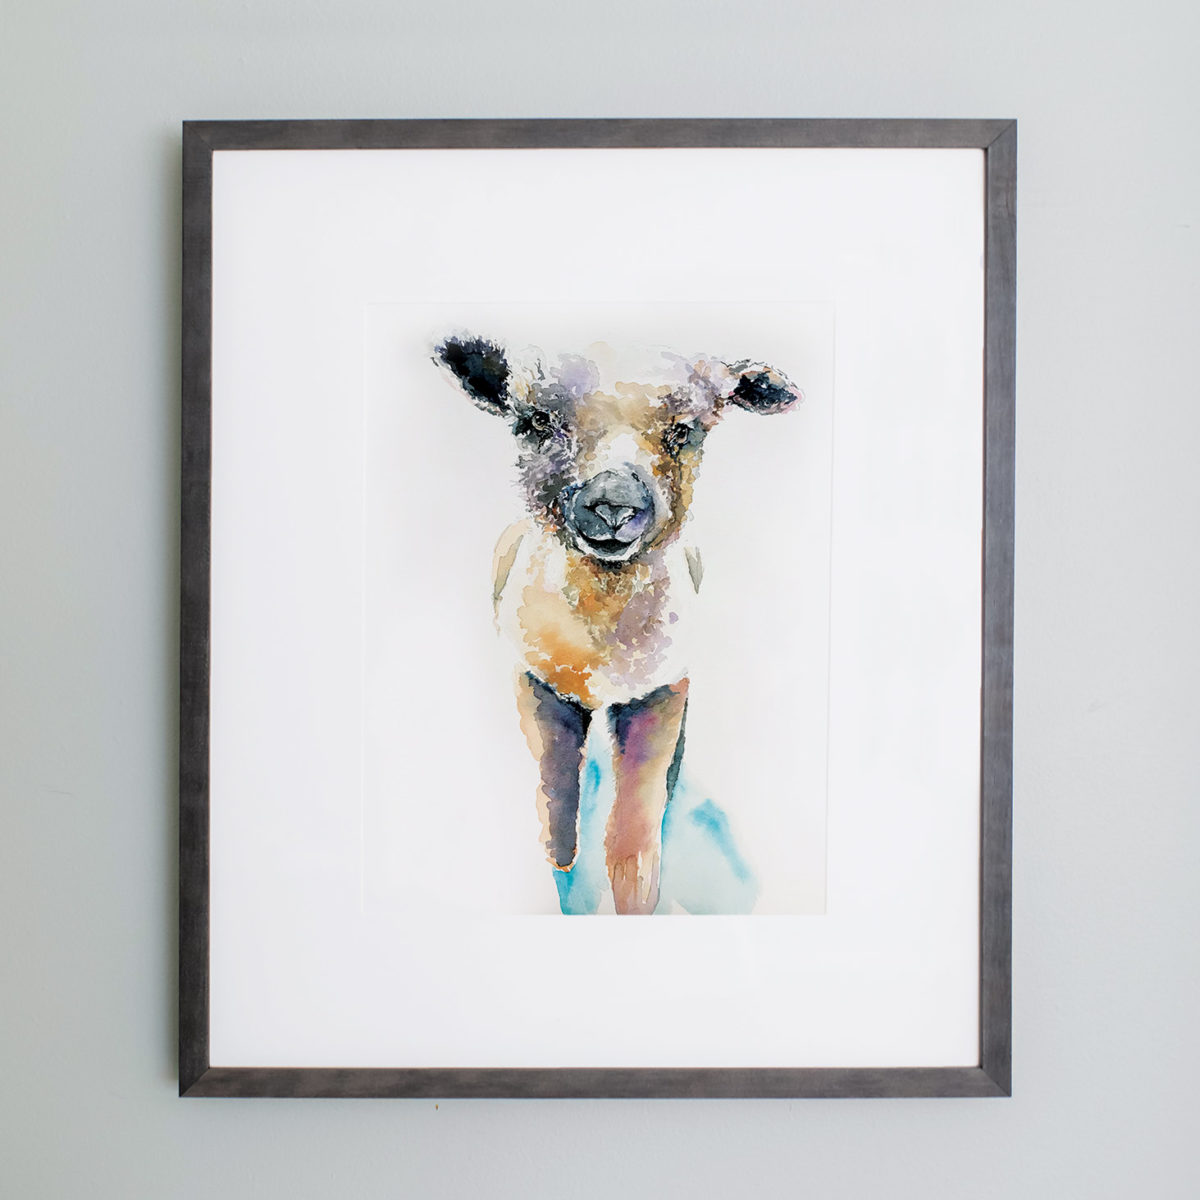 Watercolor of a lamb framed